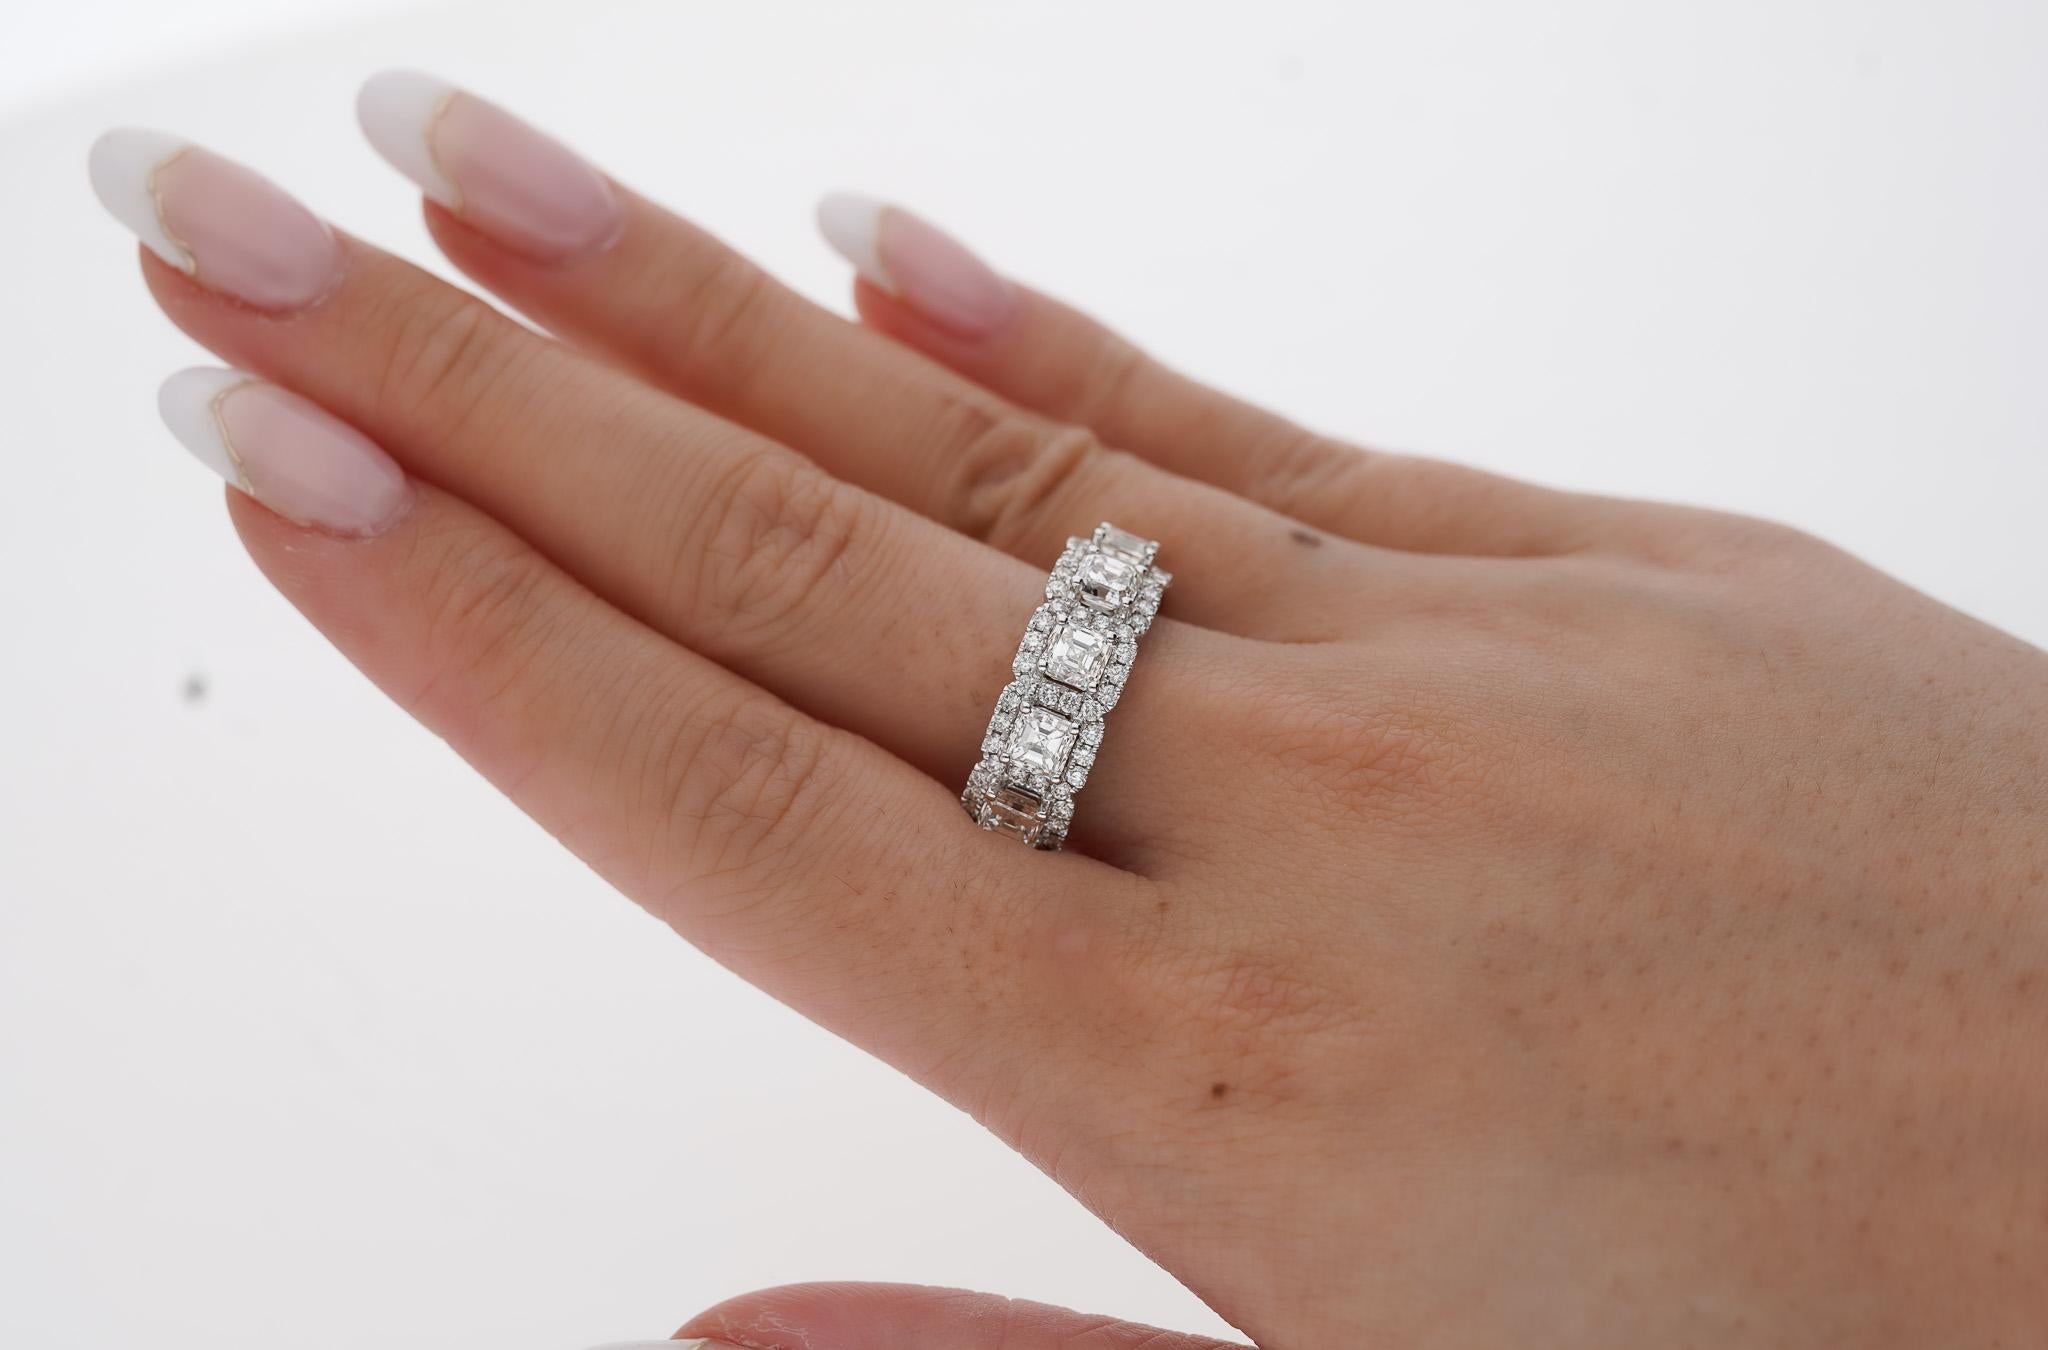 Women's Natural 2.75 CTTW Asscher Cut Diamond Band Ring in 18K White Gold For Sale